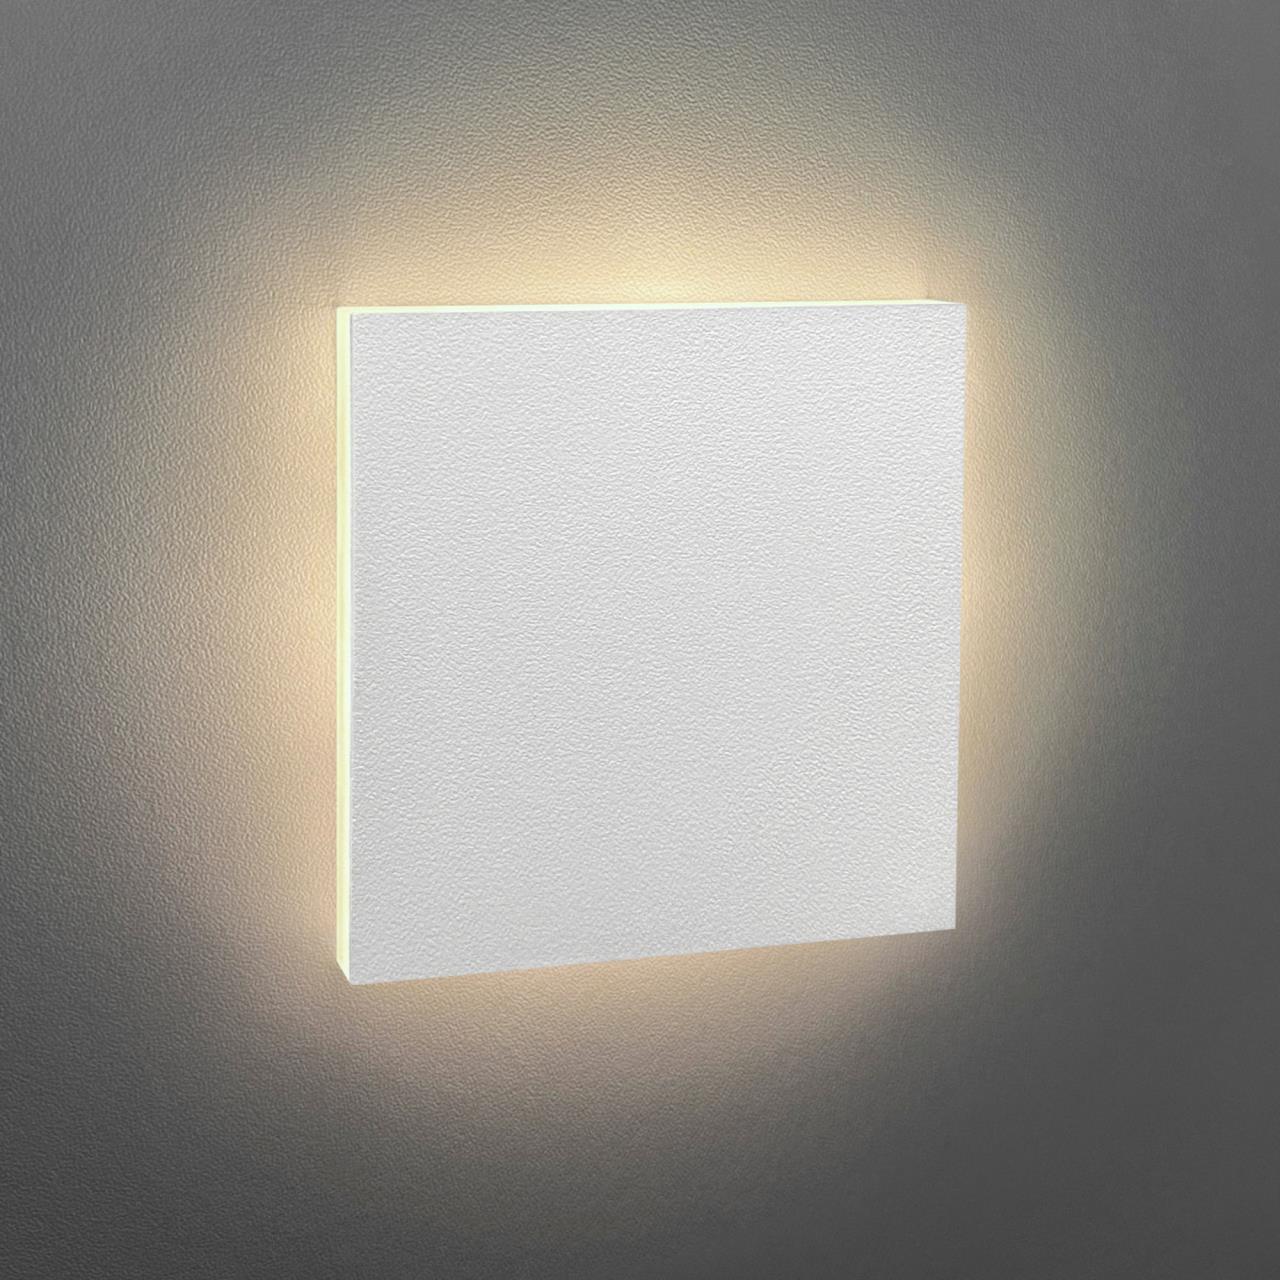 Treppenbeleuchtung | Modern LED Beleuchtung | LEDFULL Weiß | Treppenbeleuchtung Innenleuchten - Stufenbeleuchtung Standard mit indirekter Treppenlicht LED |